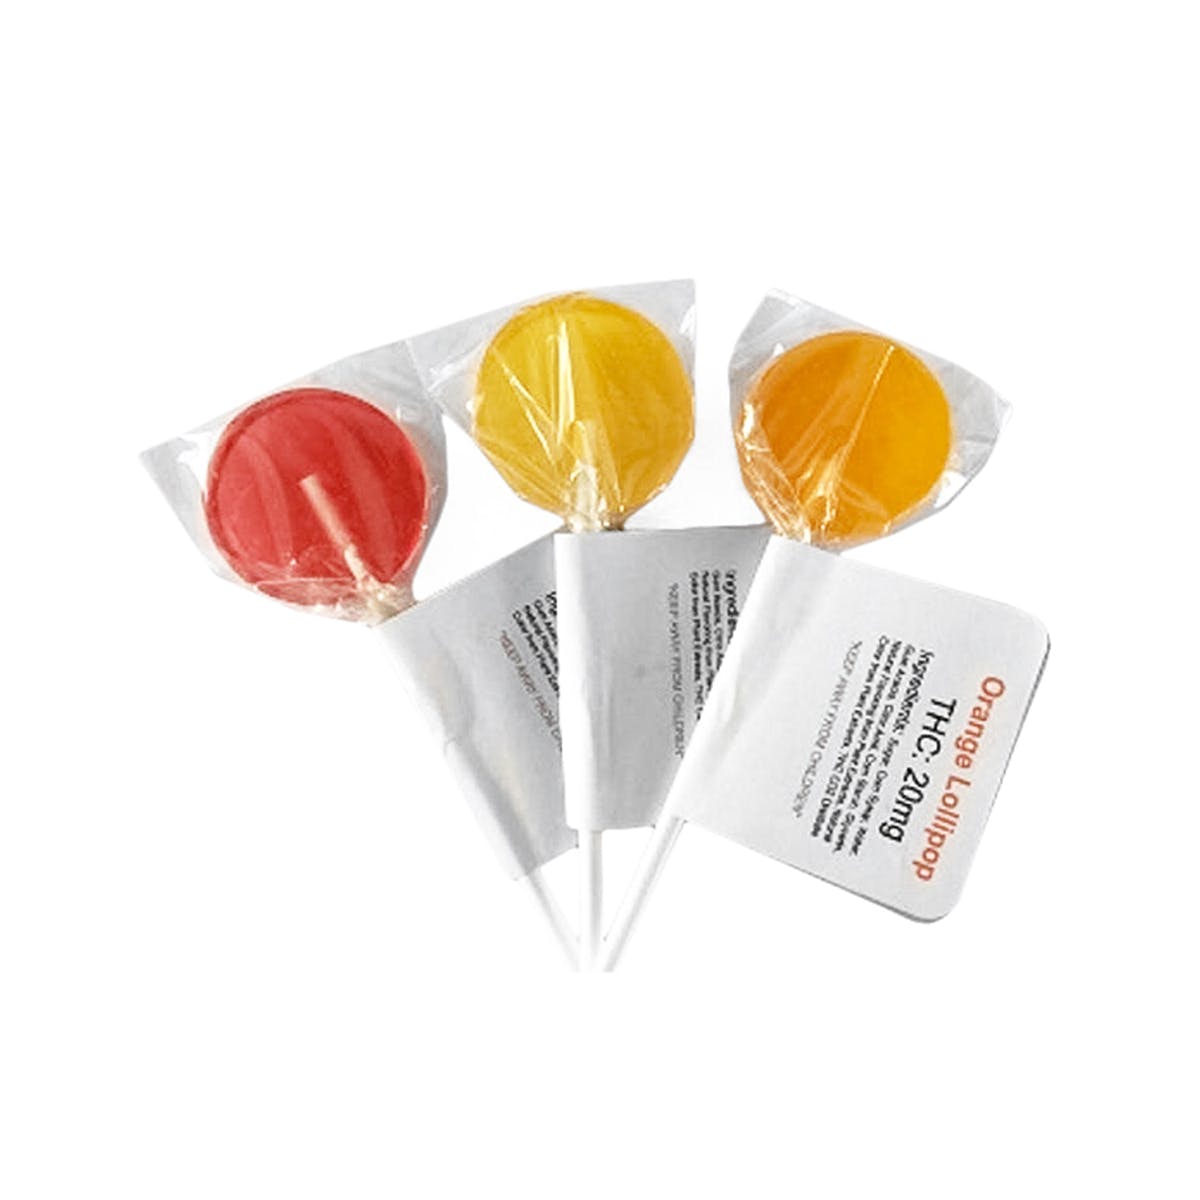 edible-tricann-alternatives-thc-lollipops-20mg